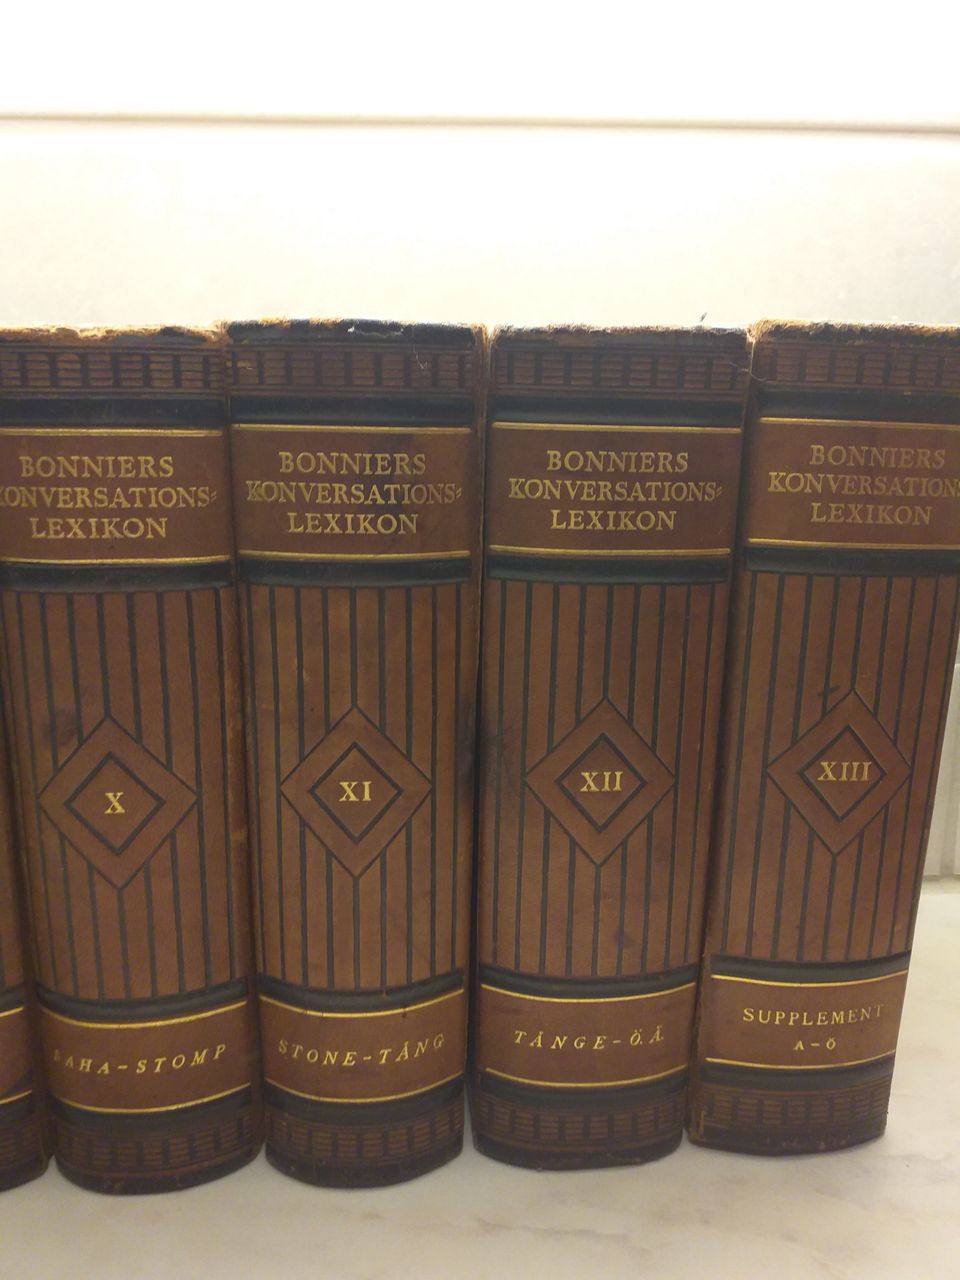 Bonniers konvensations lexicon tietosanakirja sarja -1937